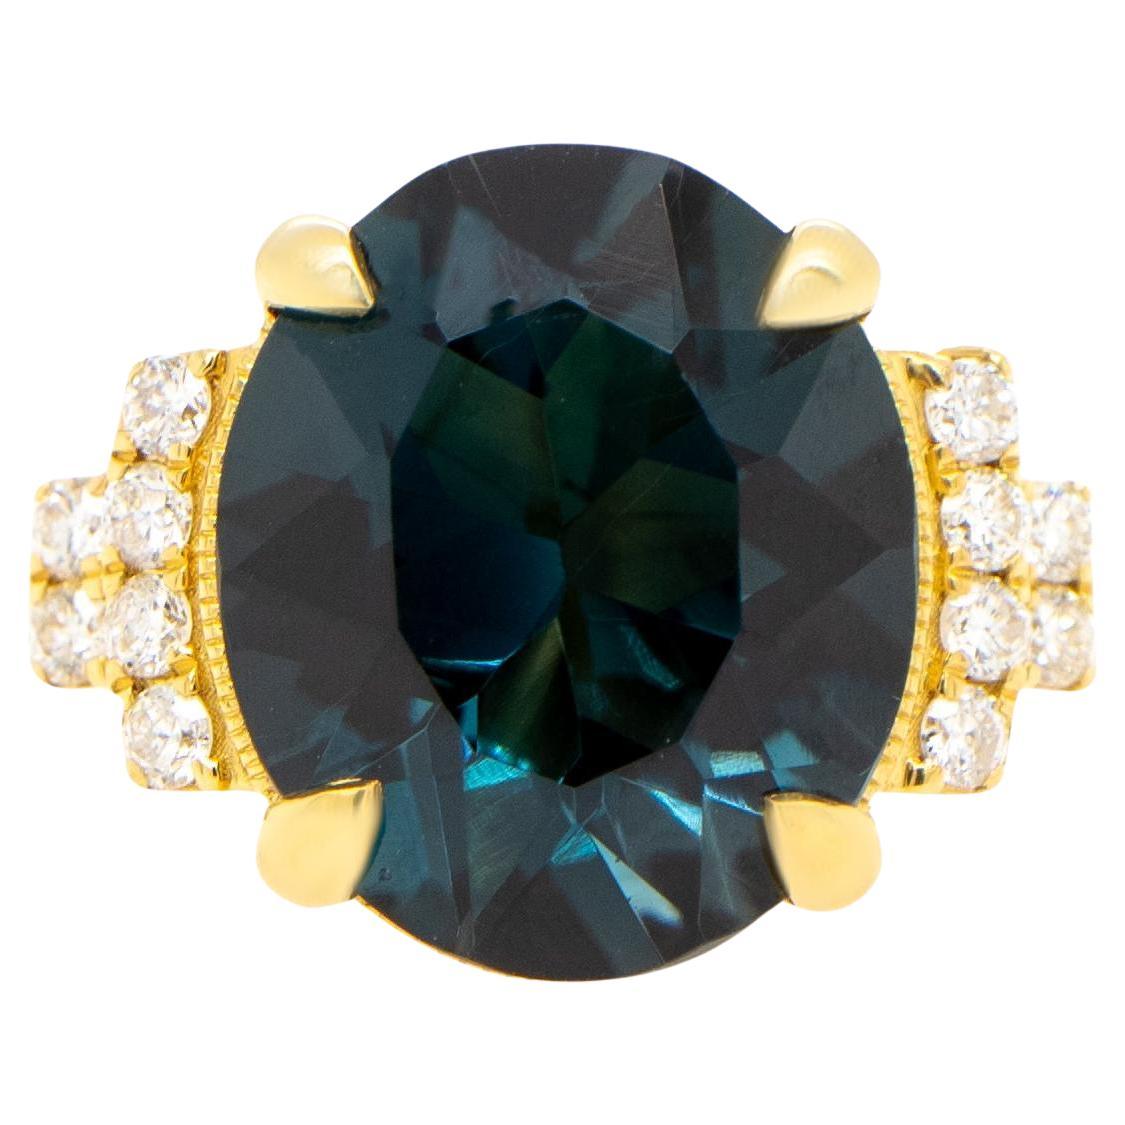 London Blue Topaz Ring Diamond Setting 4.7 Carats 18K Yellow Gold